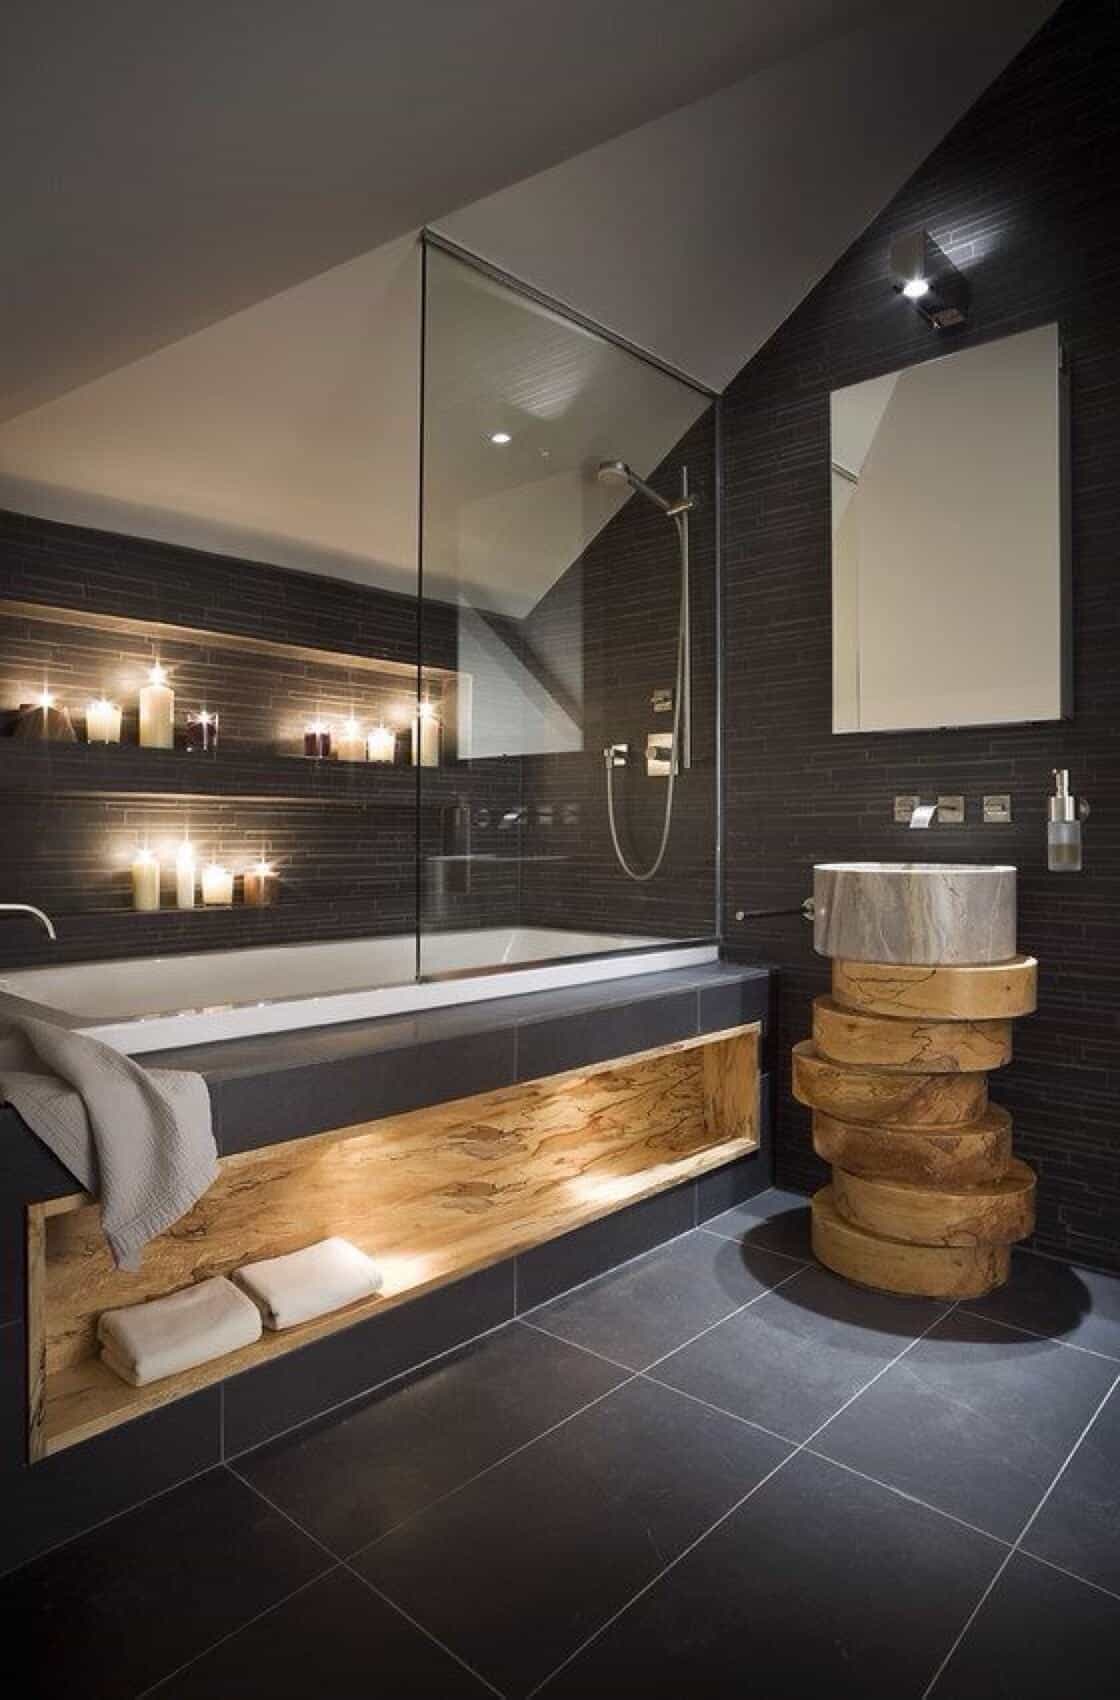 18 Rustic Bathroom Design Ideas That Are Refreshing